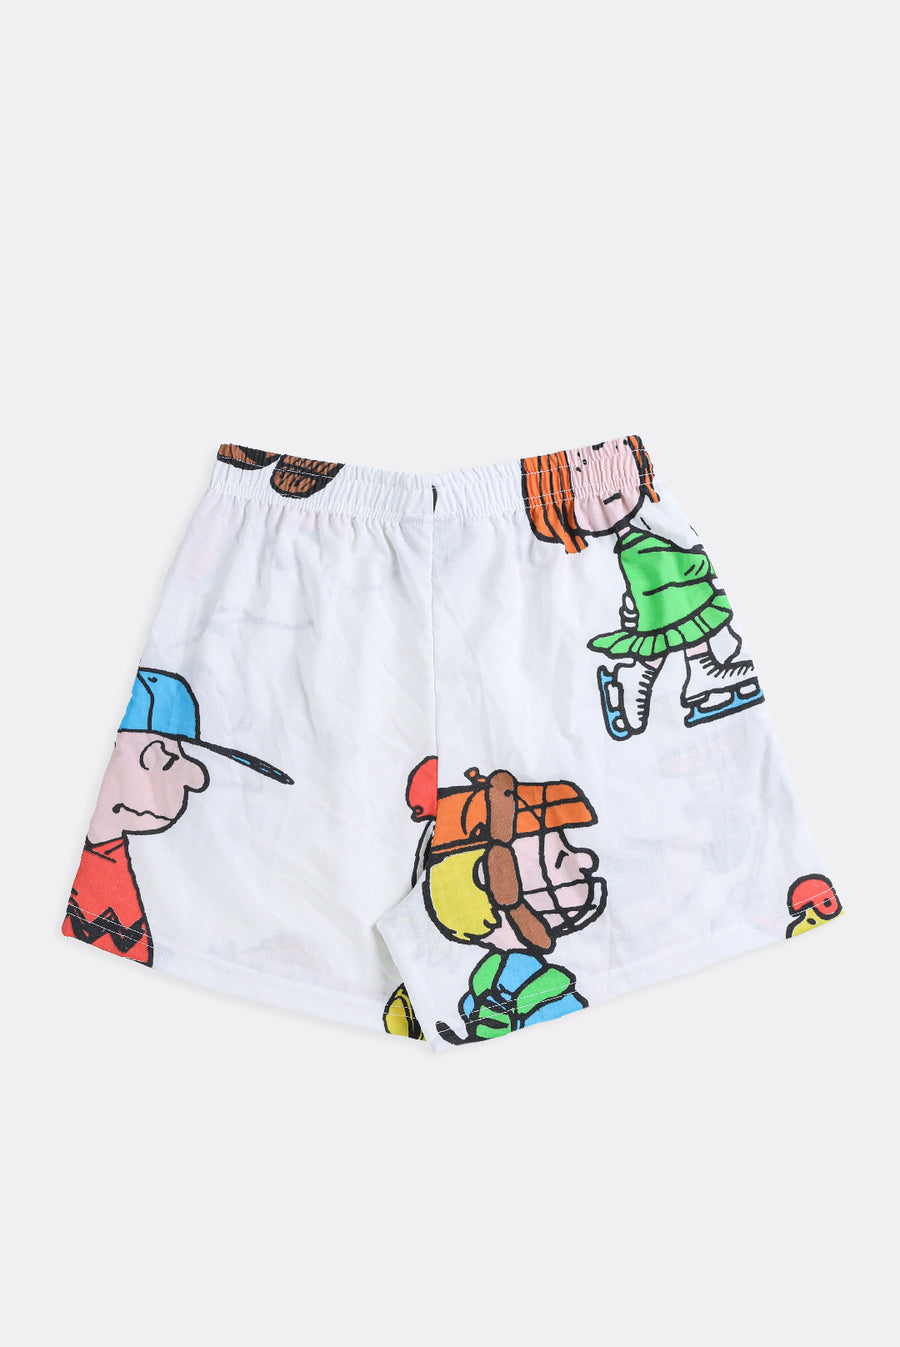 Unisex Rework Charlie Brown Boxer Shorts - XS, S